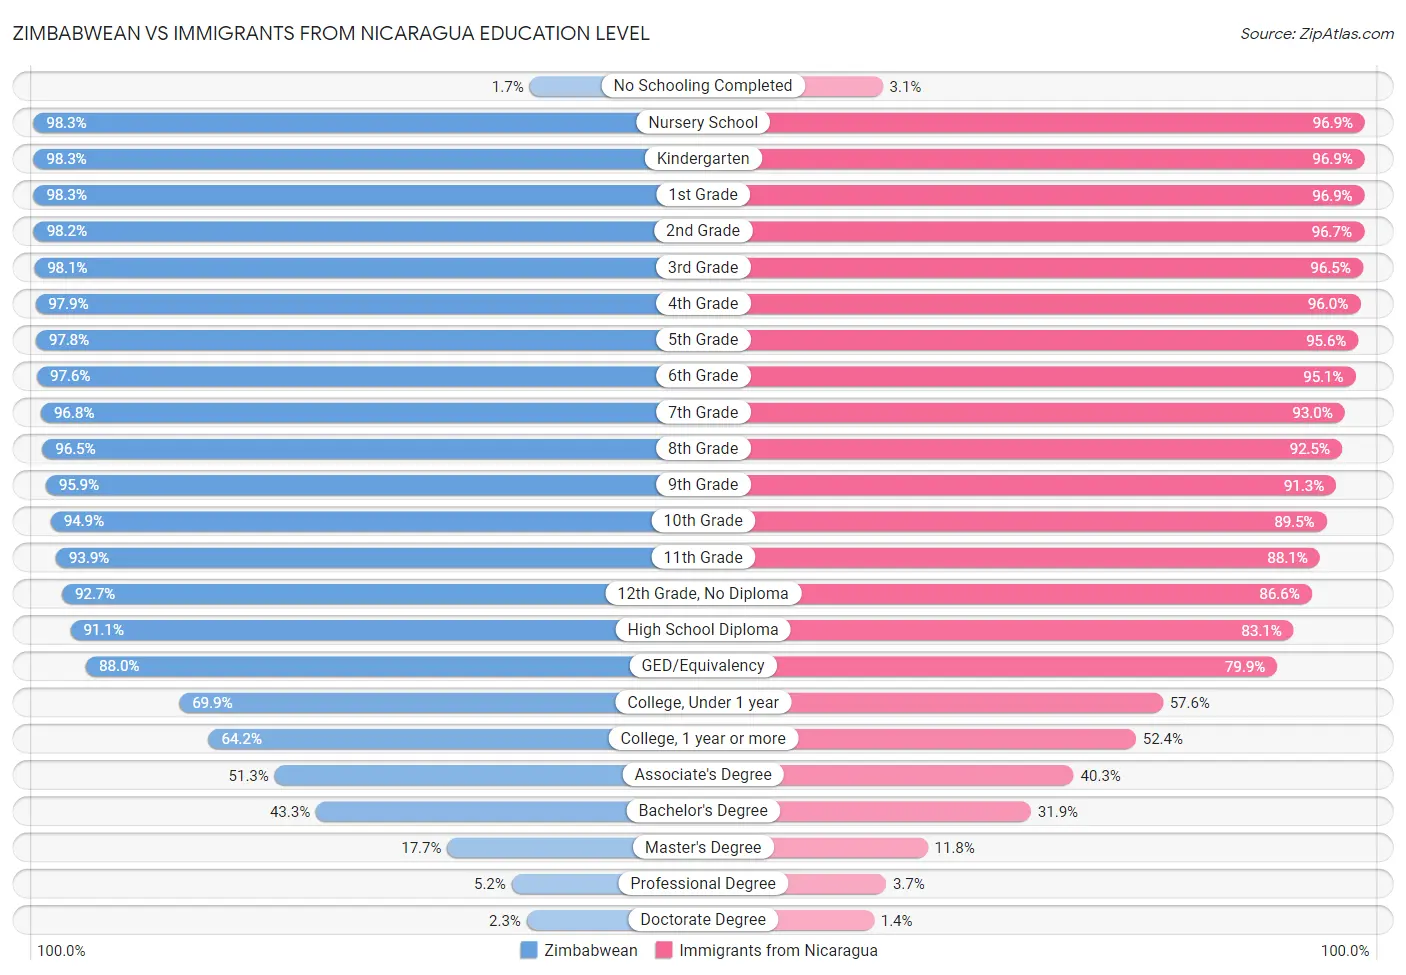 Zimbabwean vs Immigrants from Nicaragua Education Level